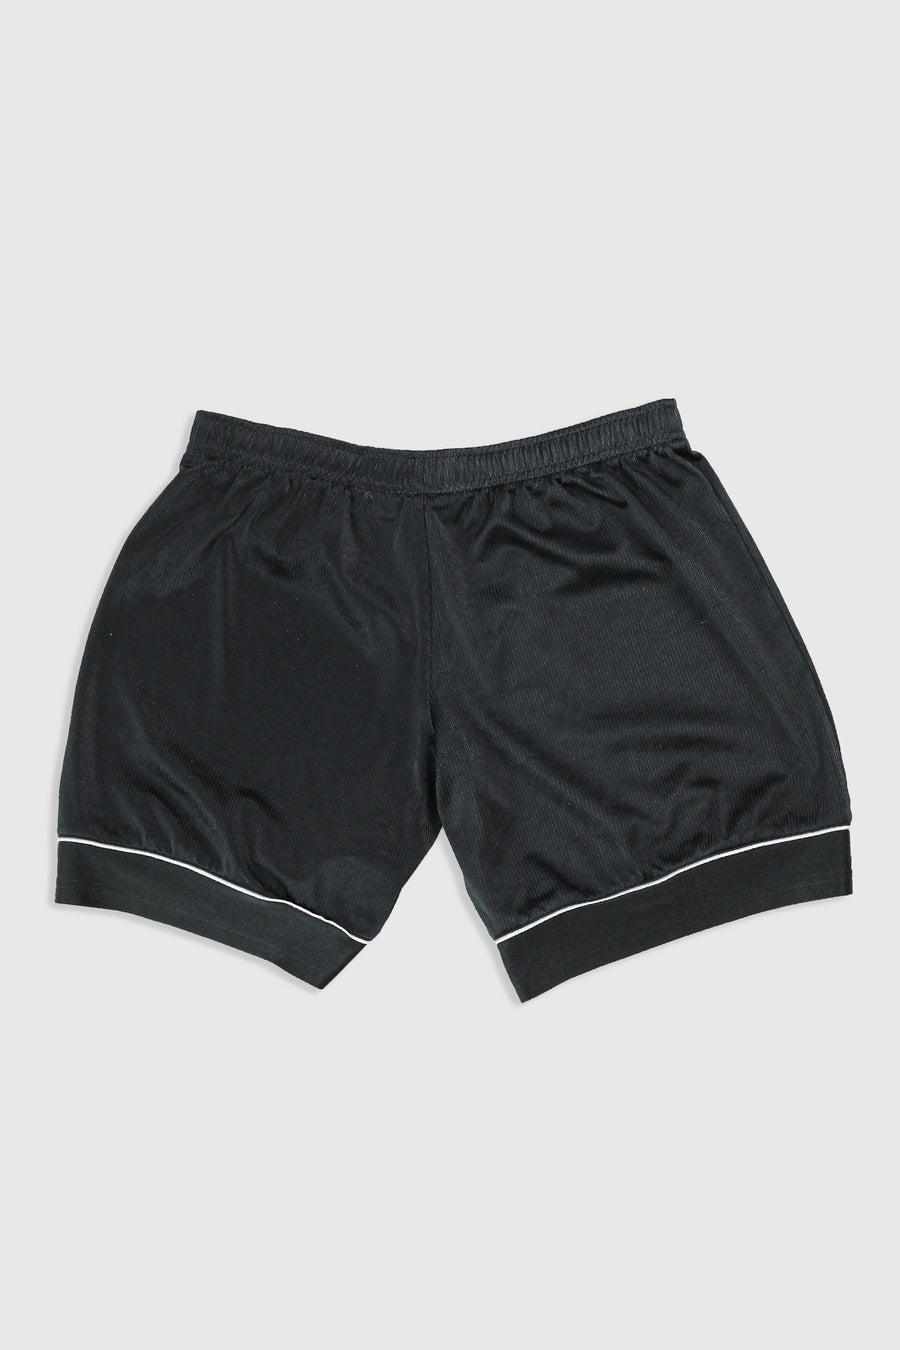 Vintage Nike Jersey Shorts